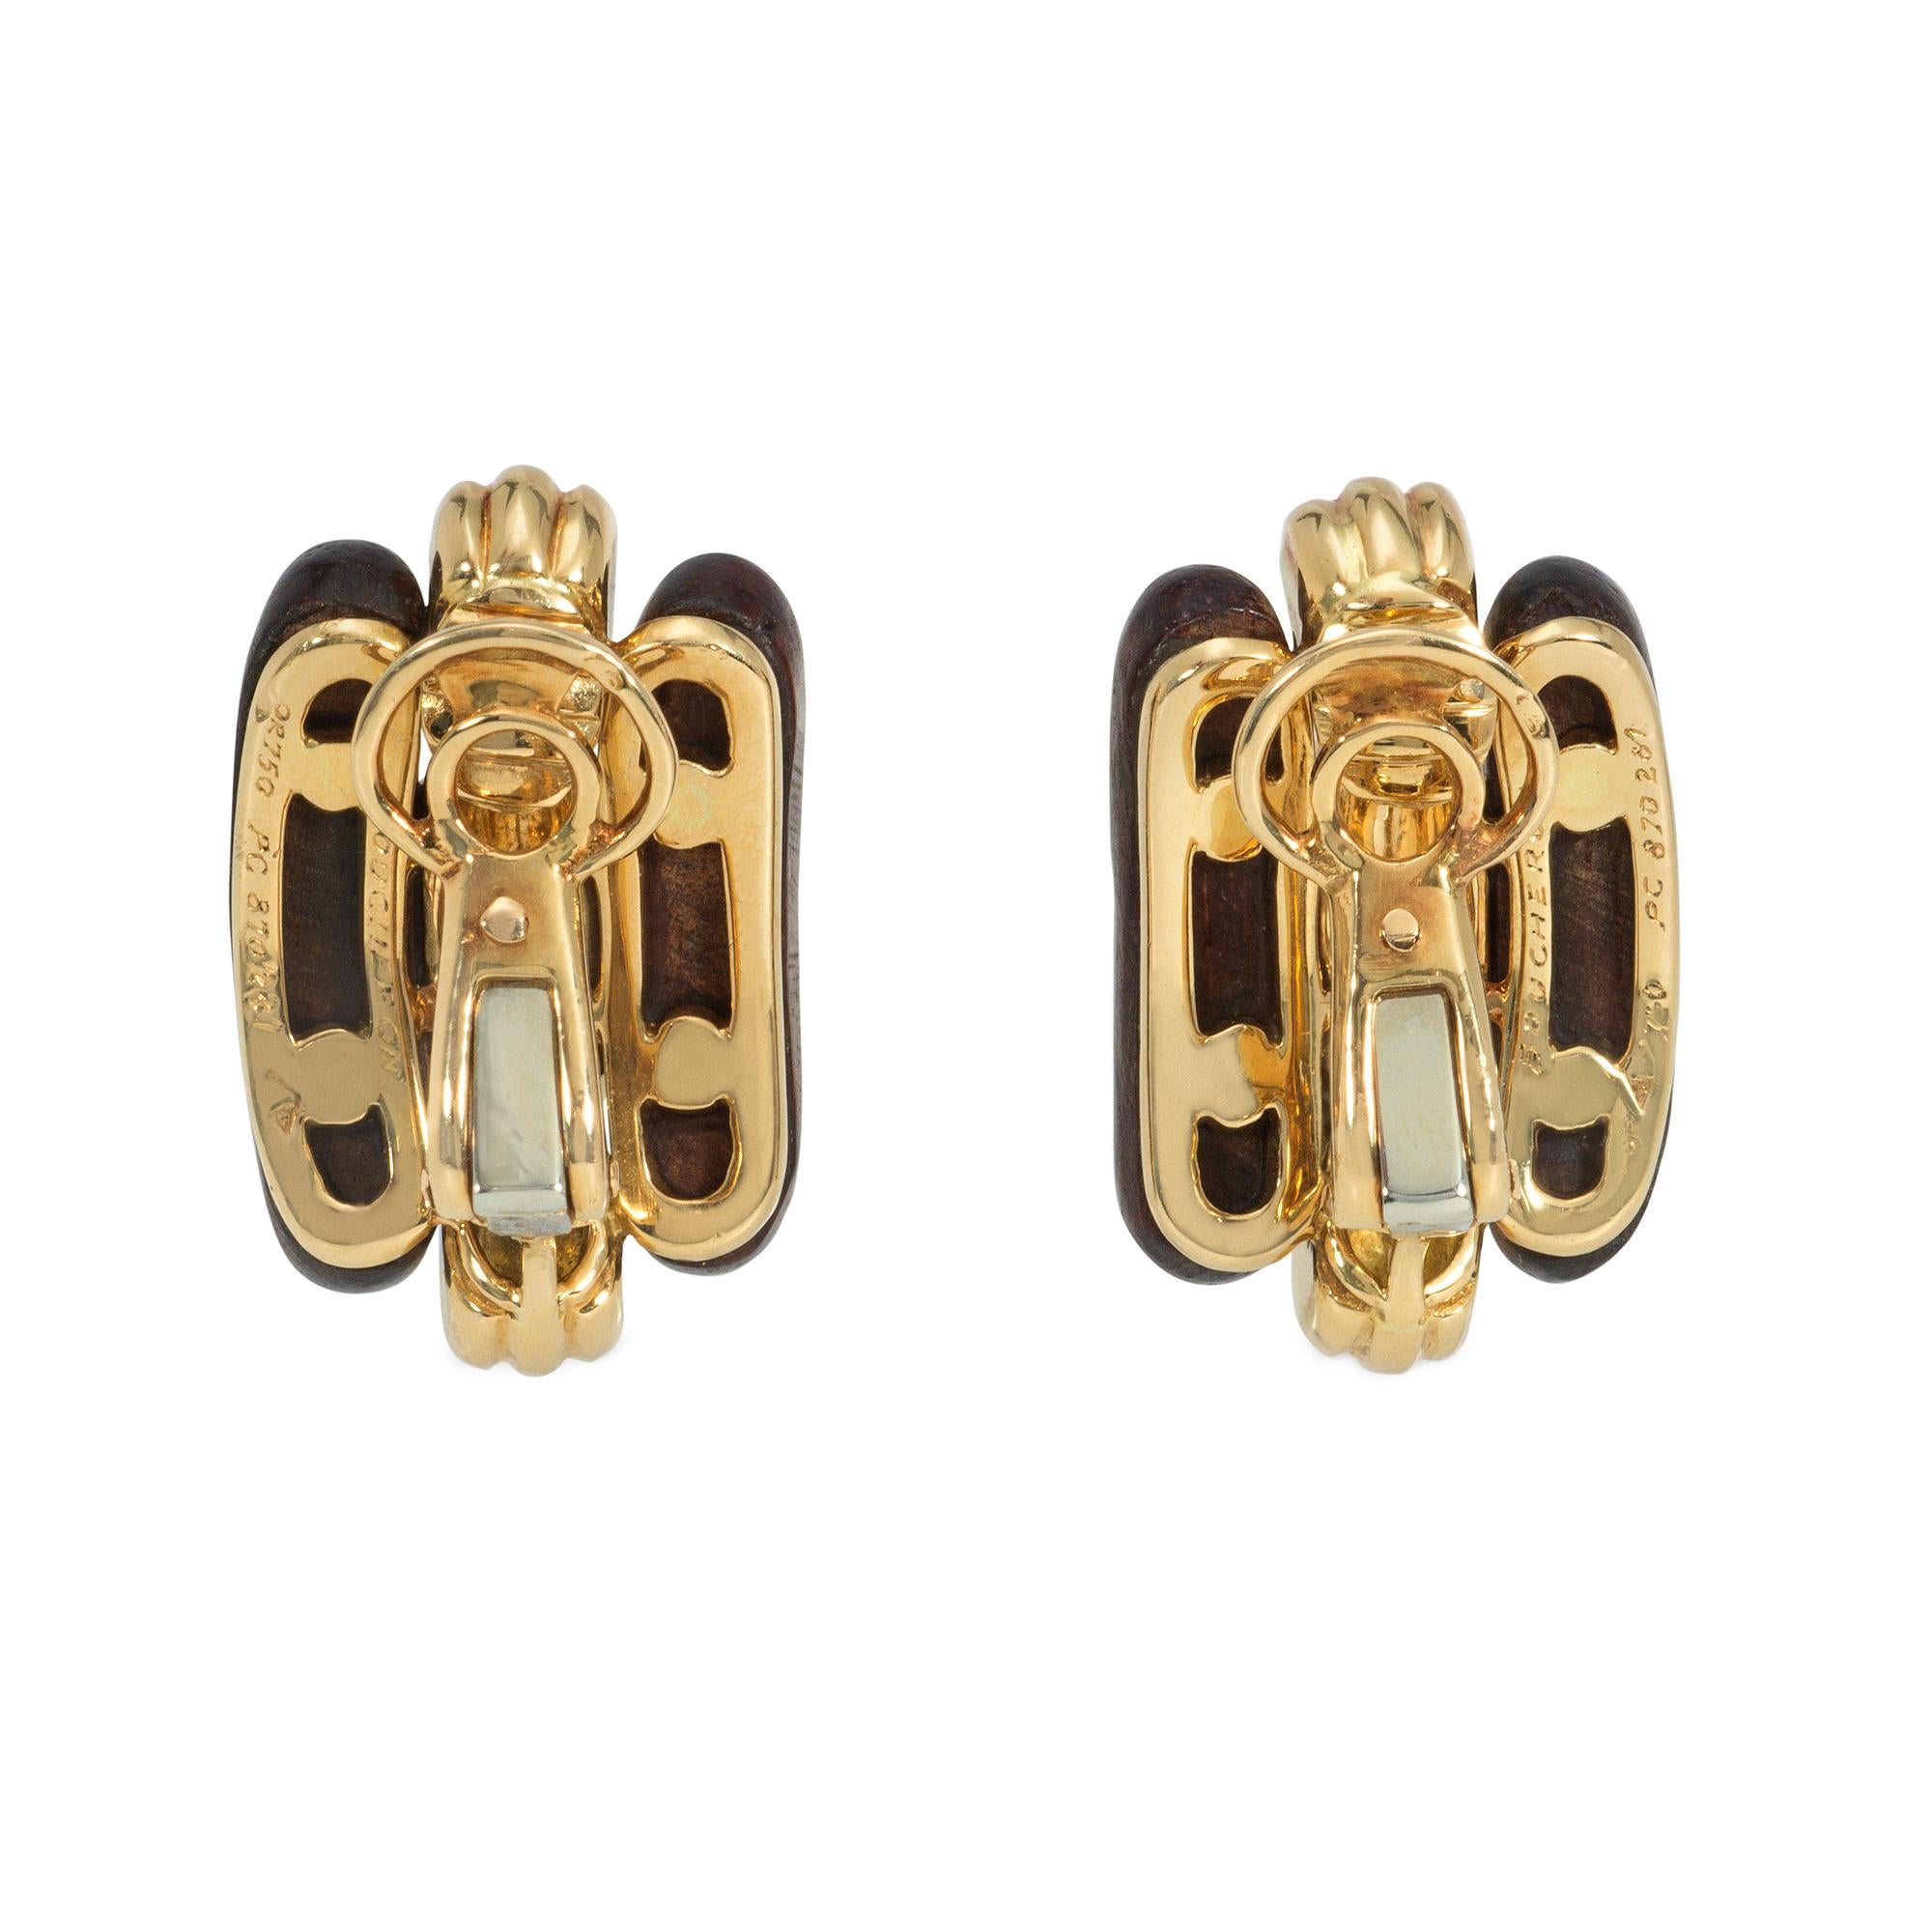 Modernist Boucheron, Paris 1970s Gold and Wood Clip Earrings